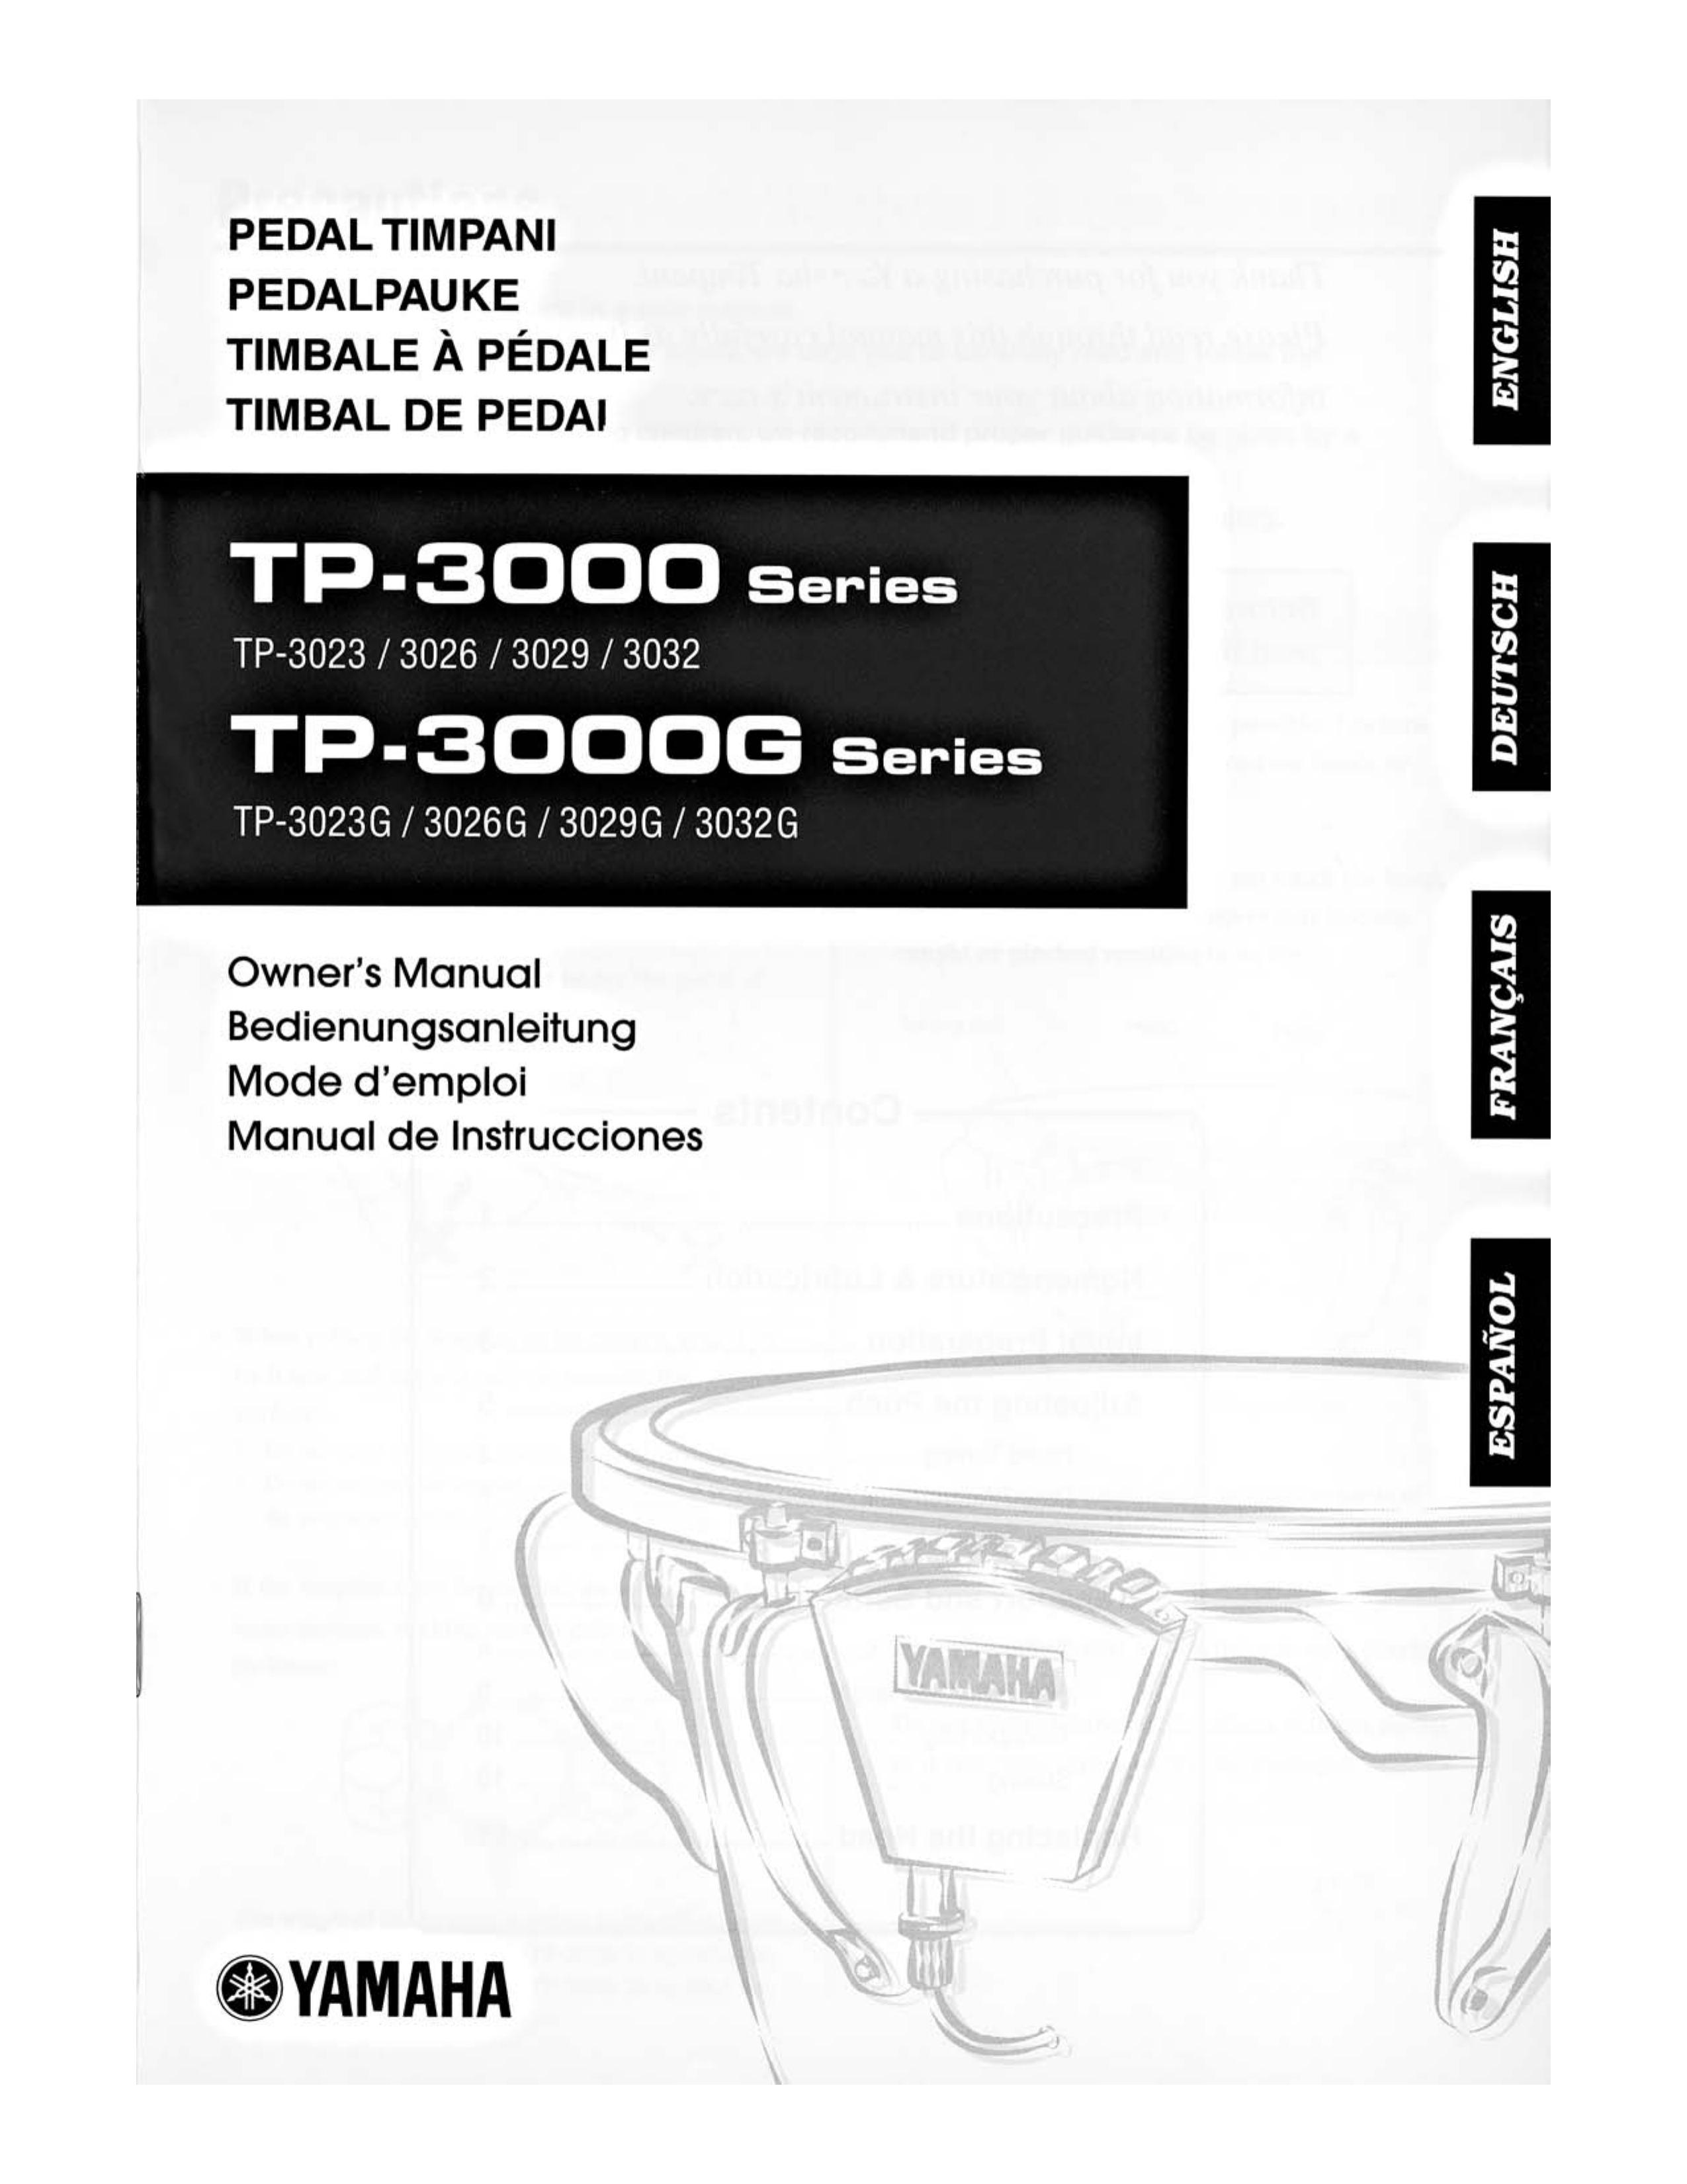 Yamaha TP-3026G Music Pedal User Manual